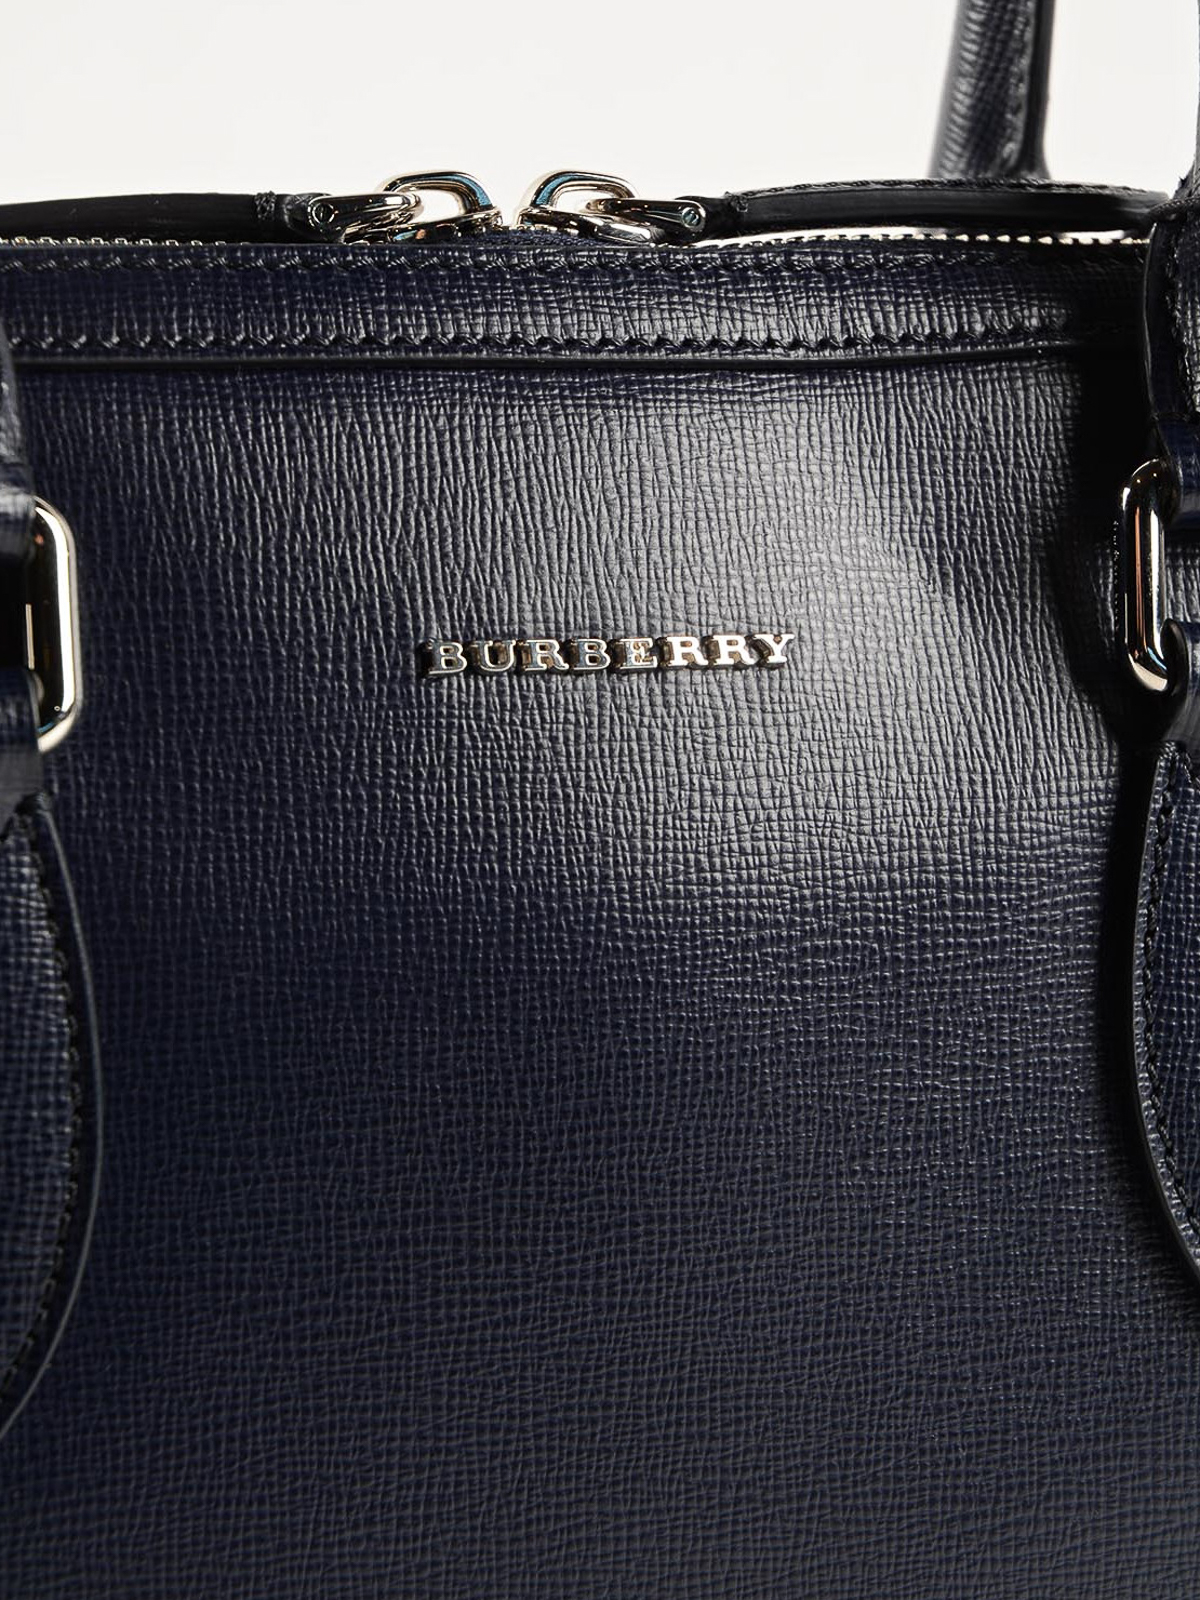 burberry briefcases